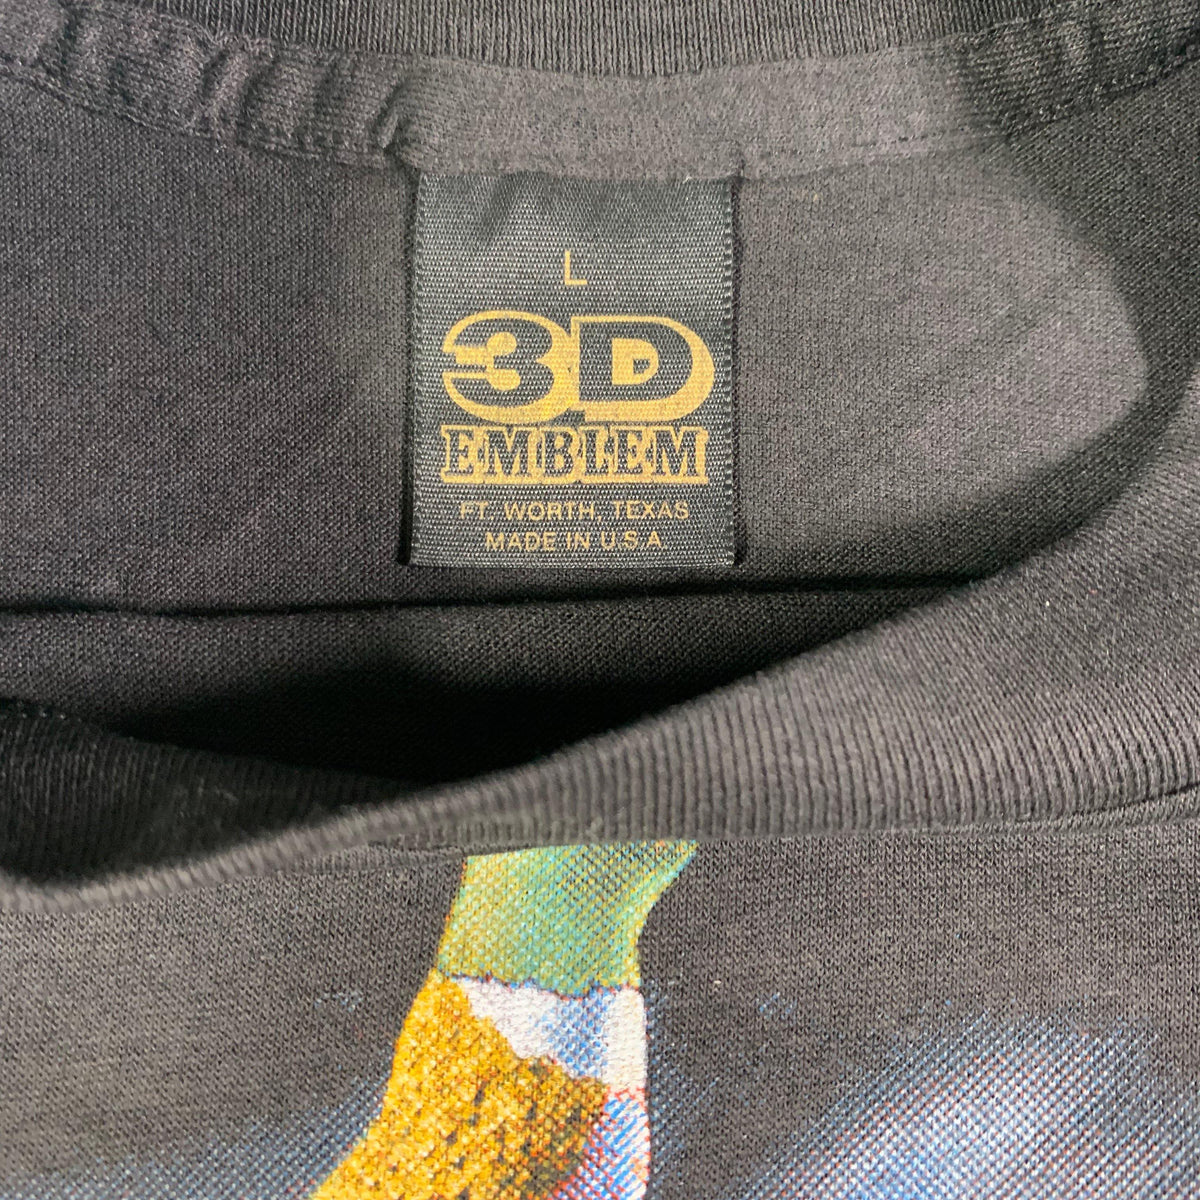 Vintage original 3D Emblem Down To Earth Pheasant Shirt Tag